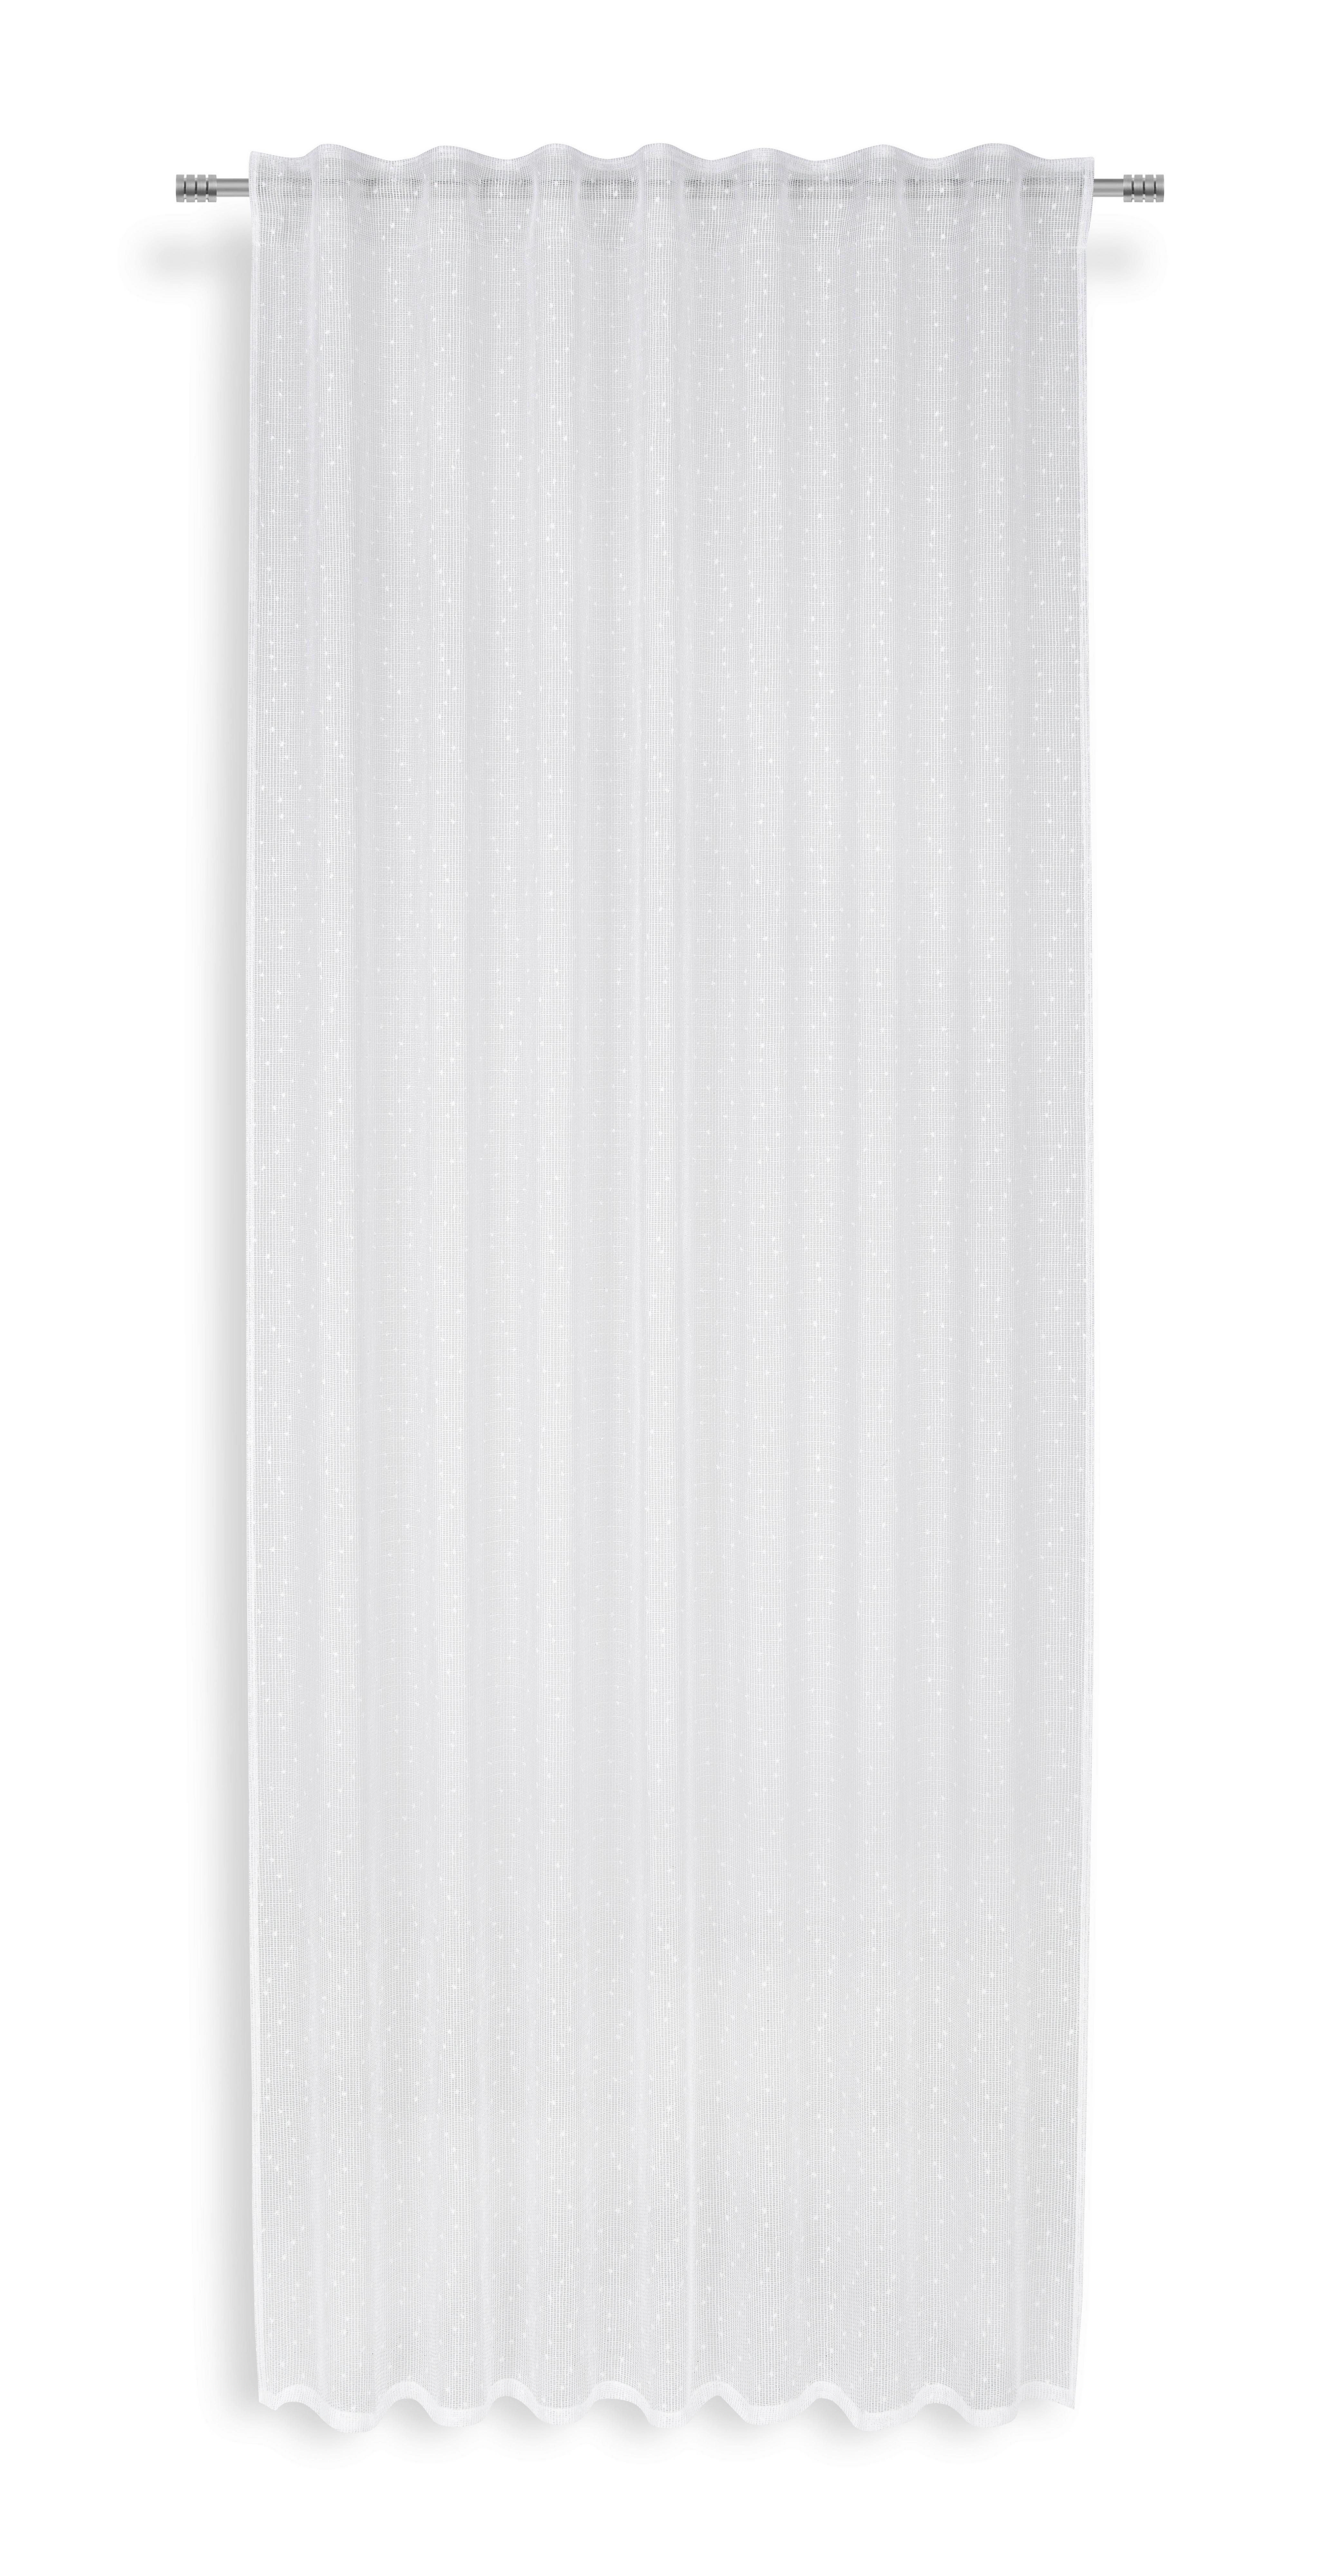 Készfüggöny Elisa - Fehér, modern, Textil (140/245cm) - Luca Bessoni